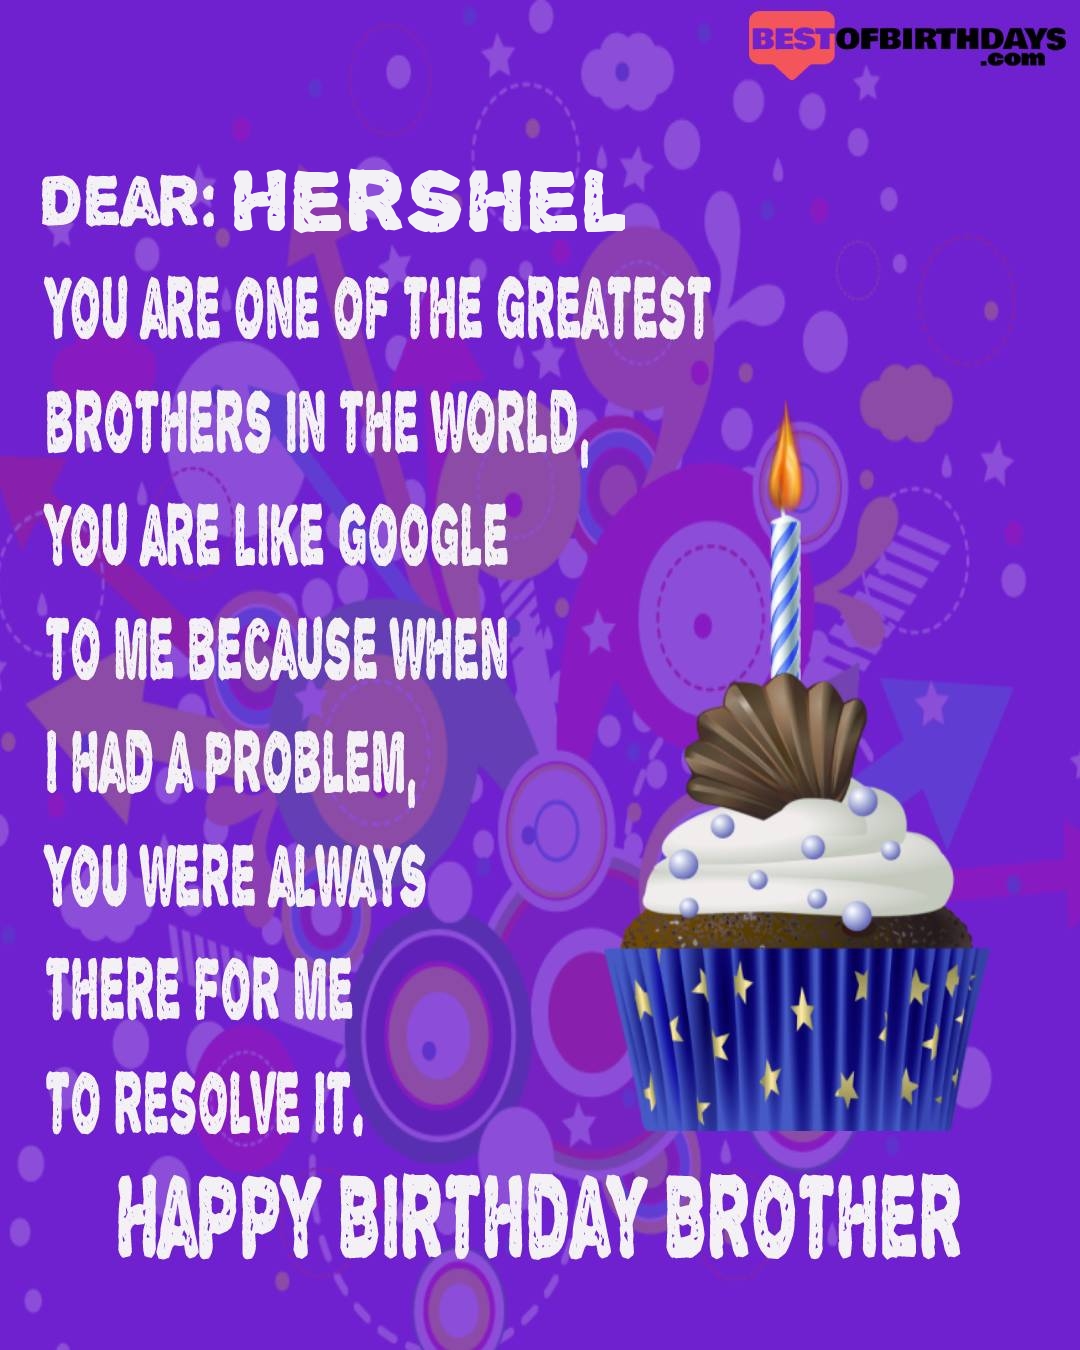 Happy birthday hershel bhai brother bro